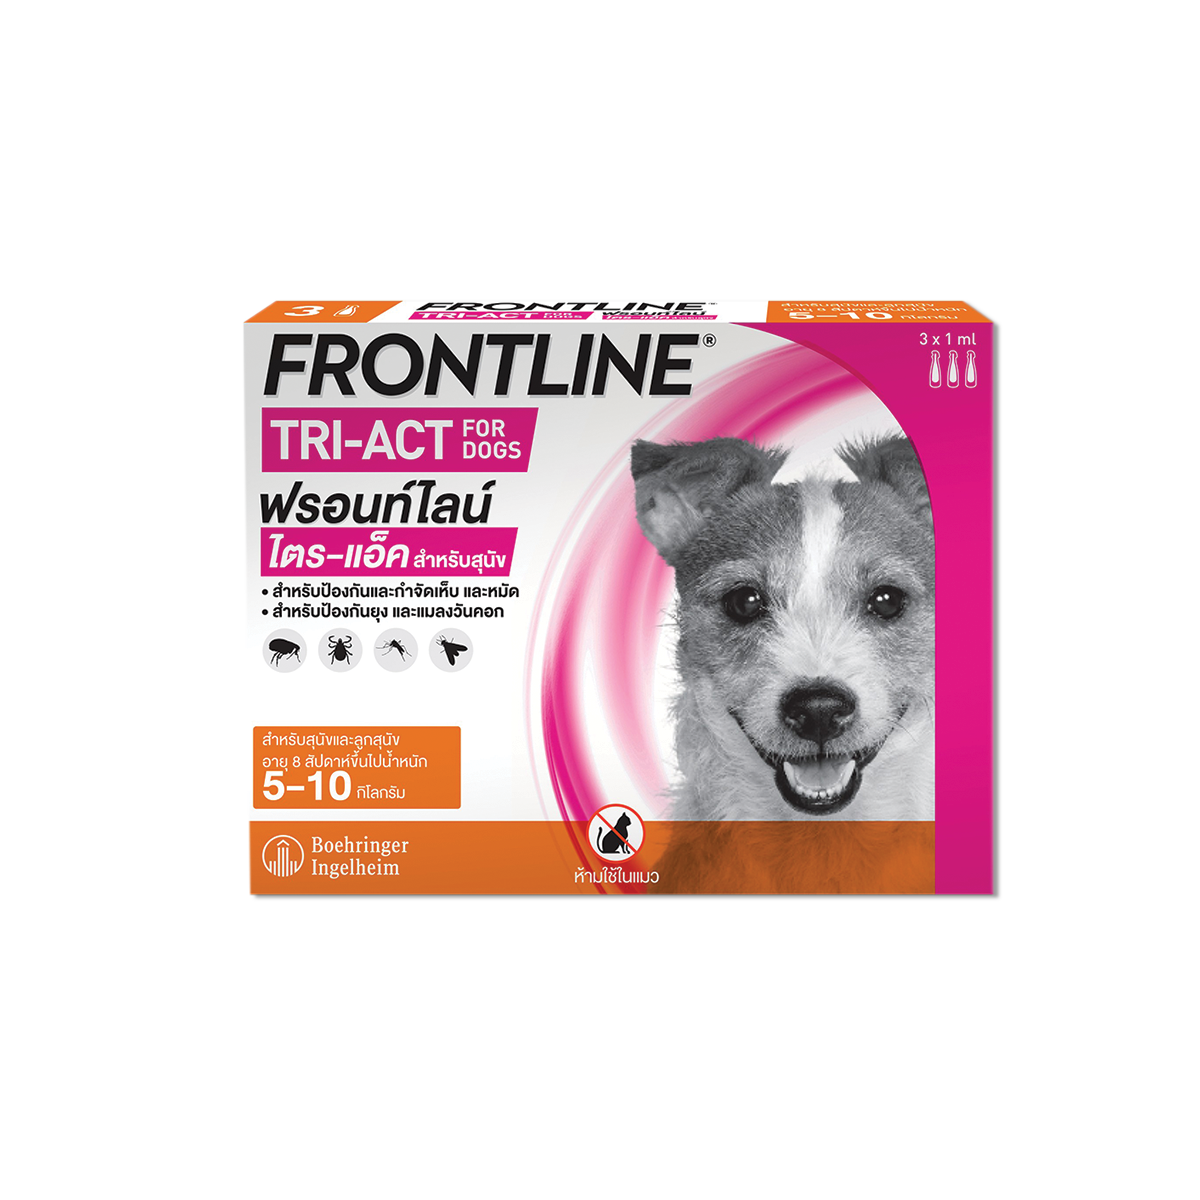 Frontline Tri-Act for Dog Size S ฟรอนท์ไลน์ ไตร-แอ็ค สำหรับสุนัข น้ำหนัก 5-10 กิโลกรัม